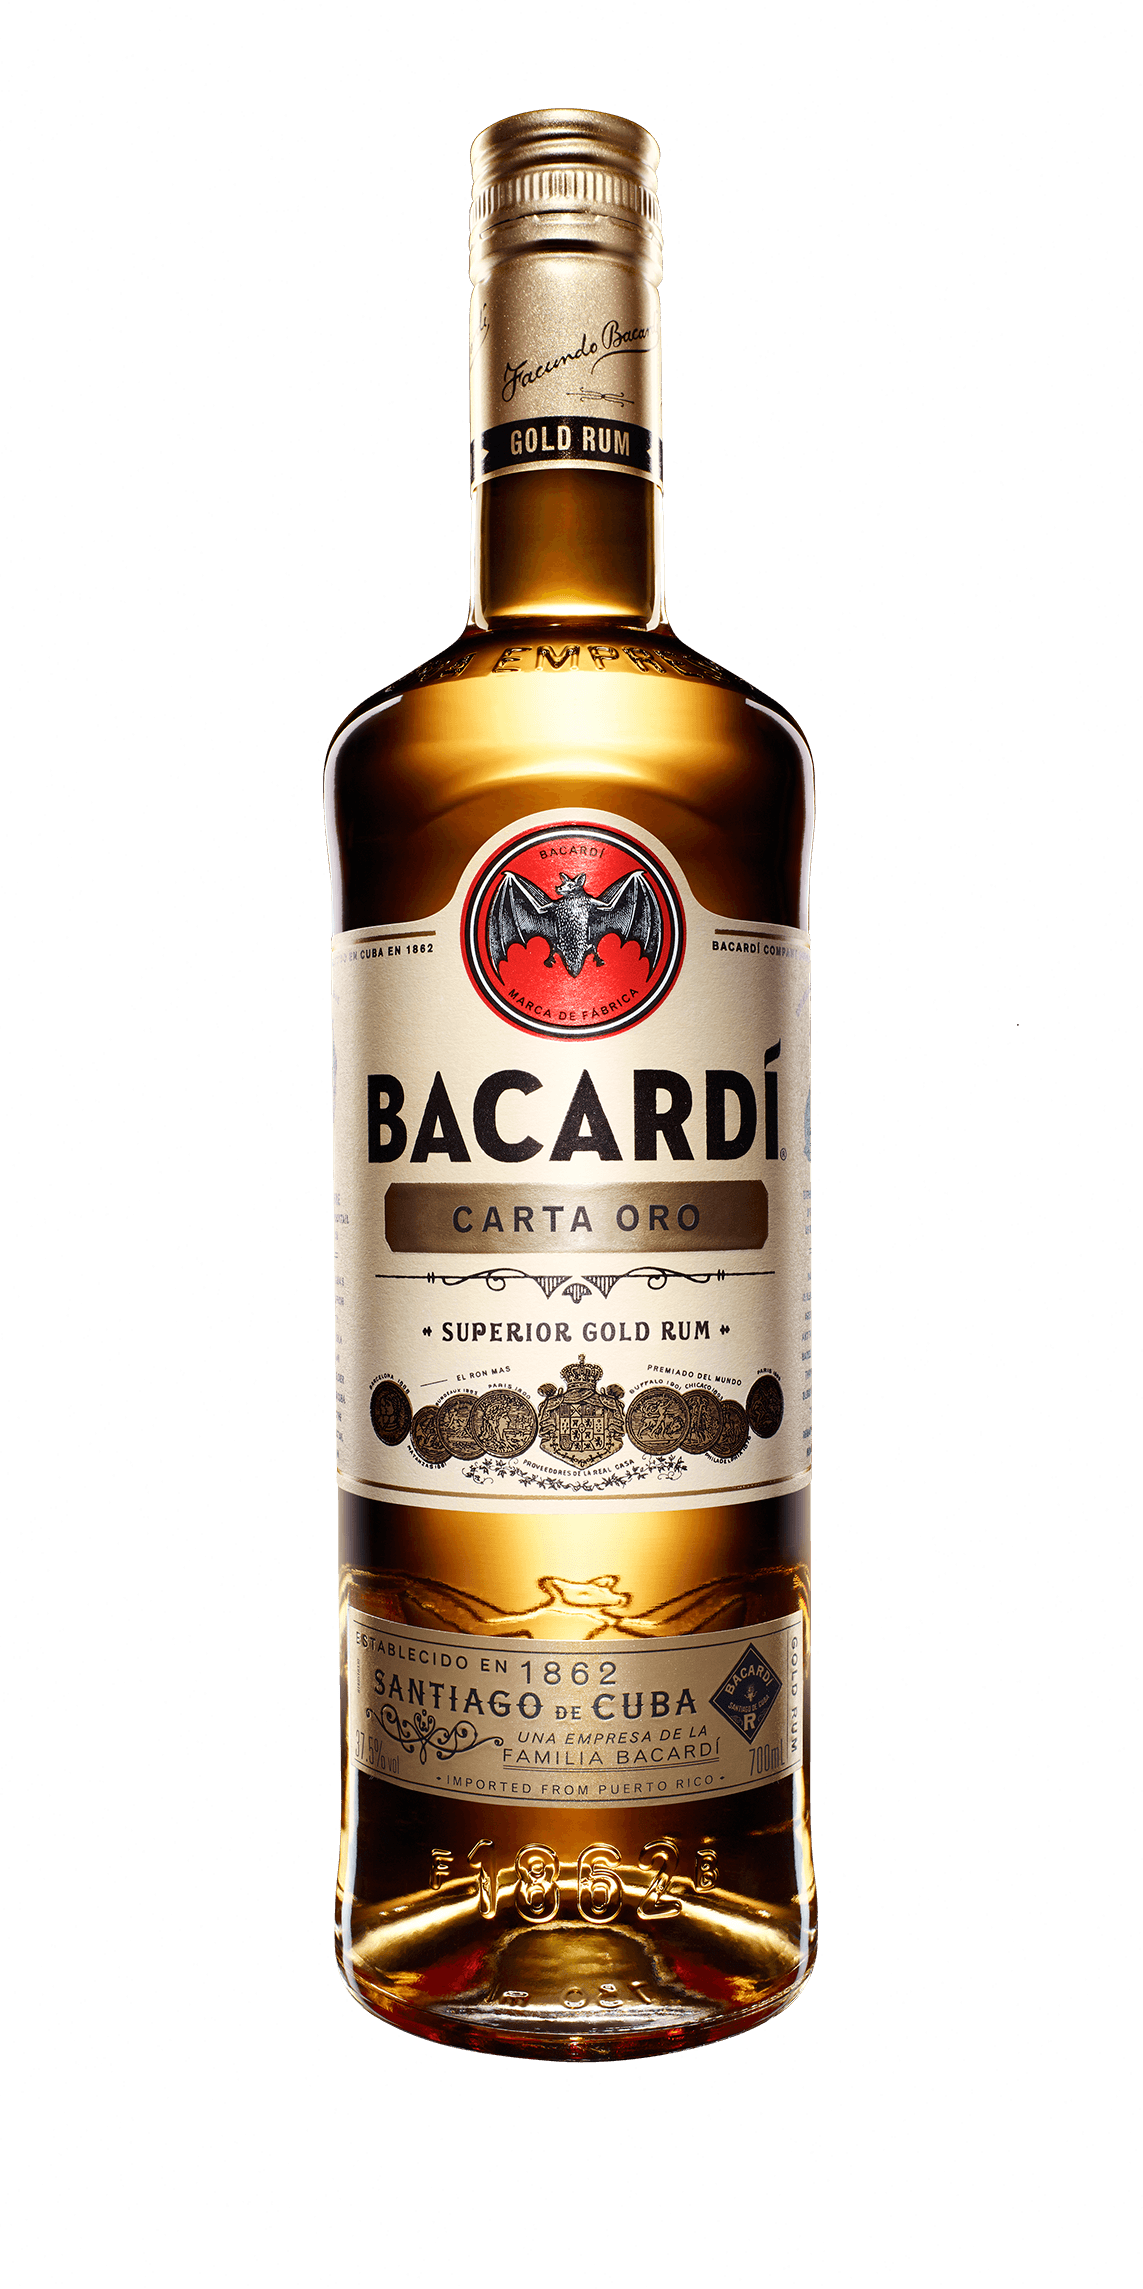 New Bacardi Bottle Logo - BACARDÍ® RUM UNVEILS NEW BOTTLE AND LABEL DESIGN FOR WORLD'S